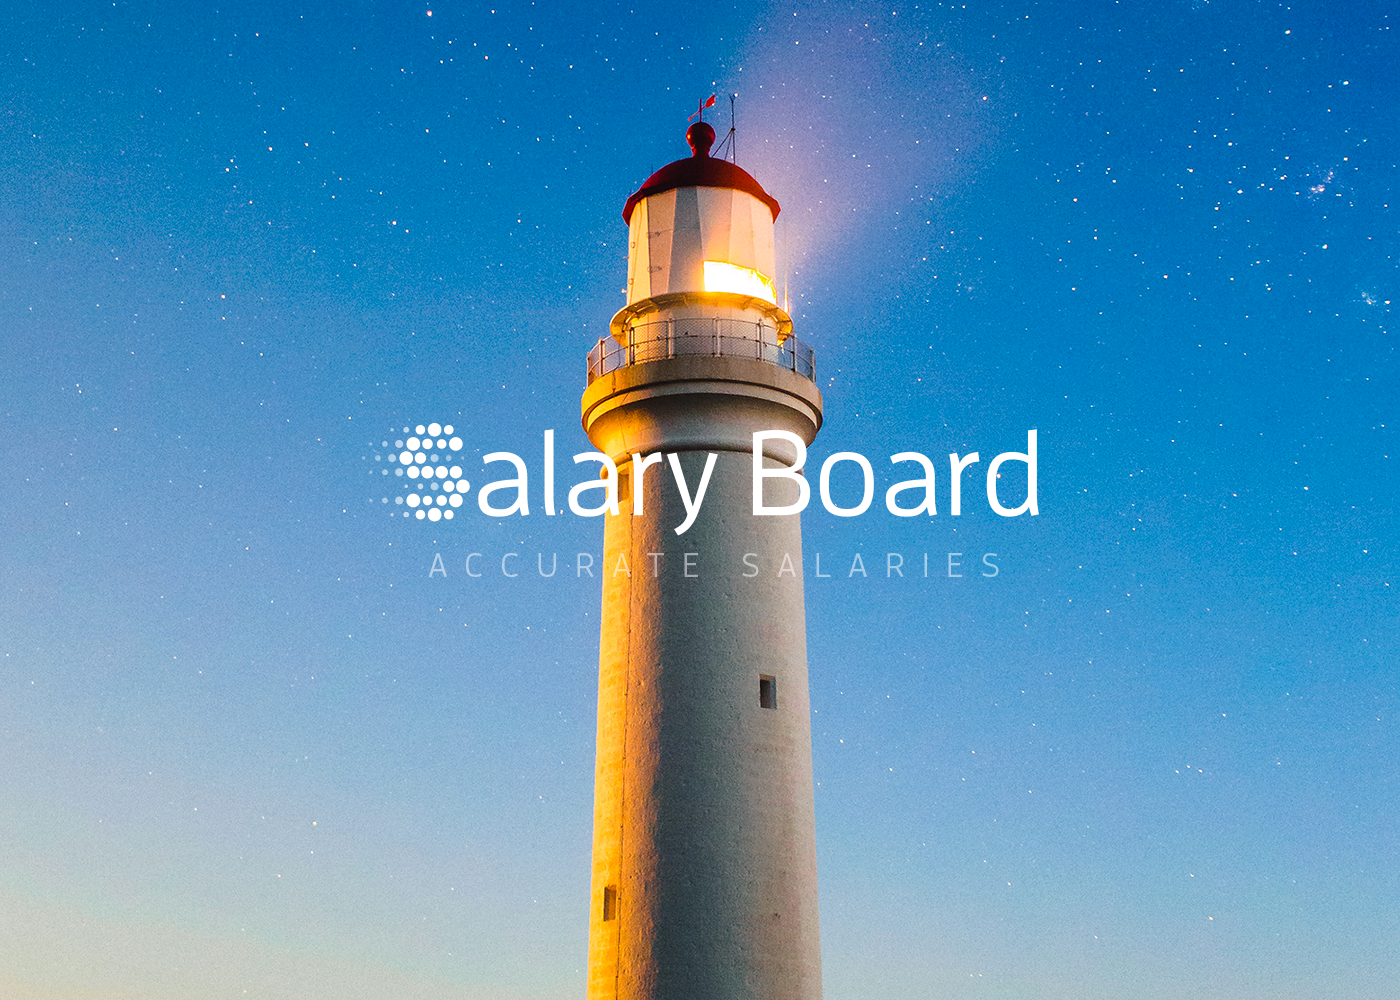 brand Web design salary board singapore